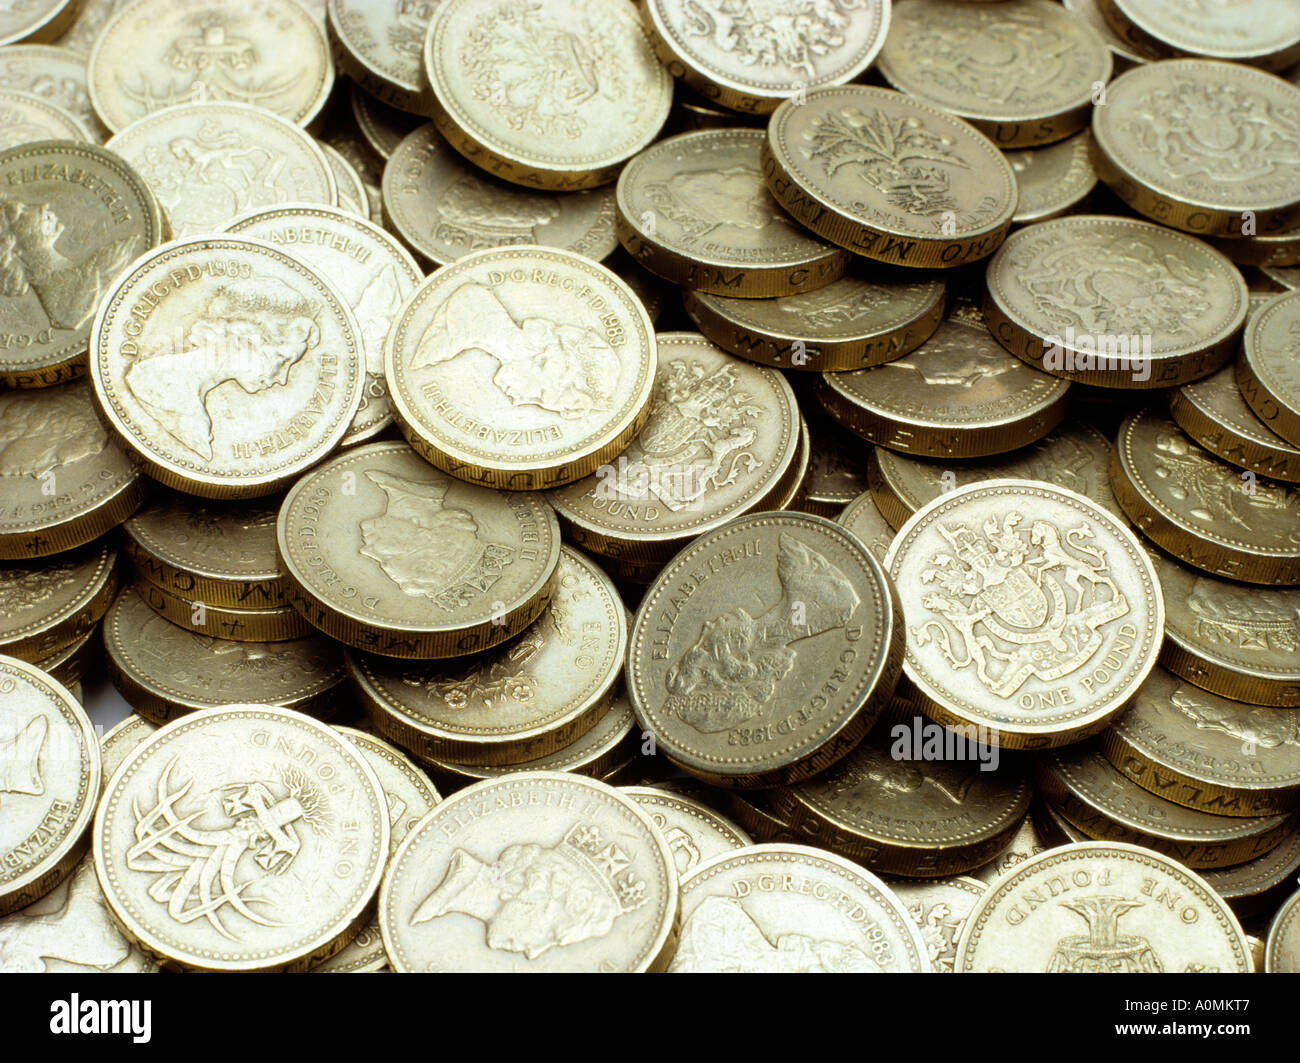 Money Pile of UK pound coins Stock Photo